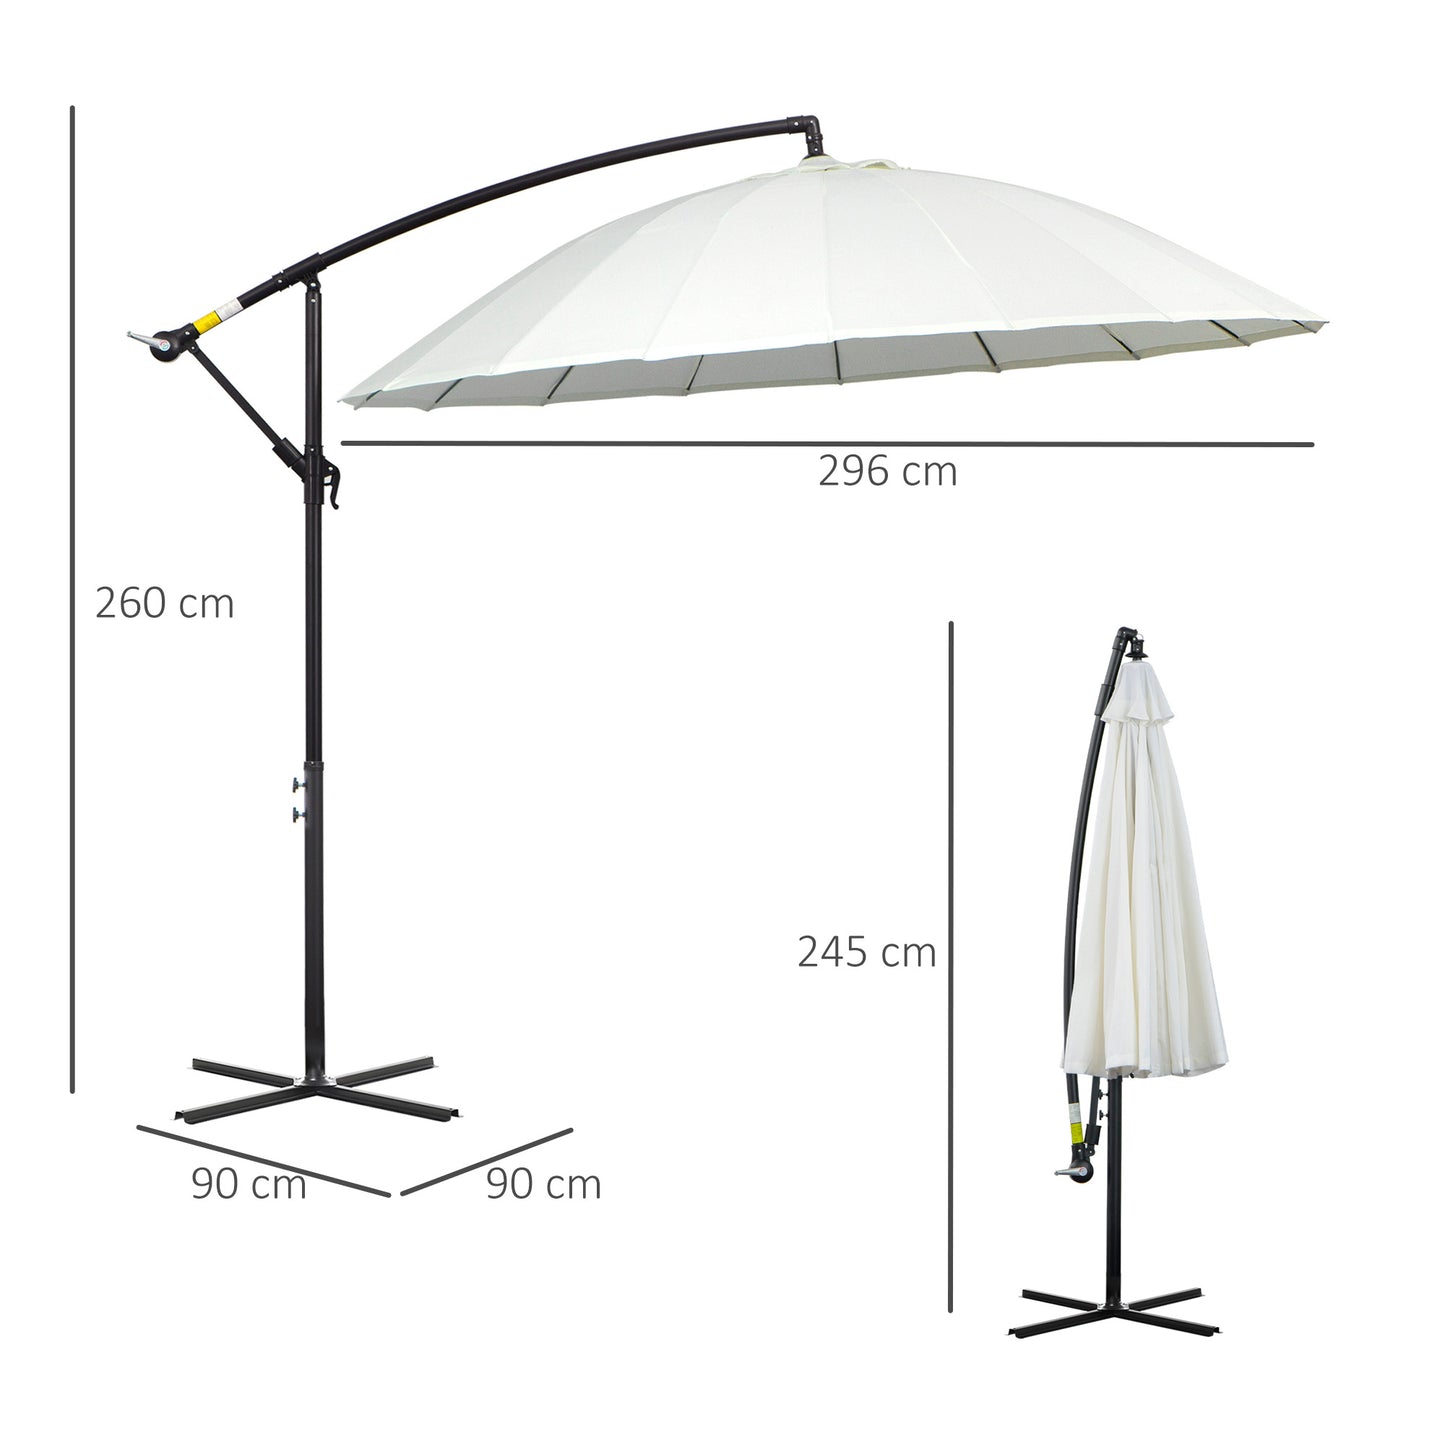 Outsunny 3(m) Cantilever Sun Umbrella Outdoor Market Table Parasol w/ 18 Sturdy Ribs Cross Base for Garden Lawn Pool Cream White & Vents Adjustable Angle Patio